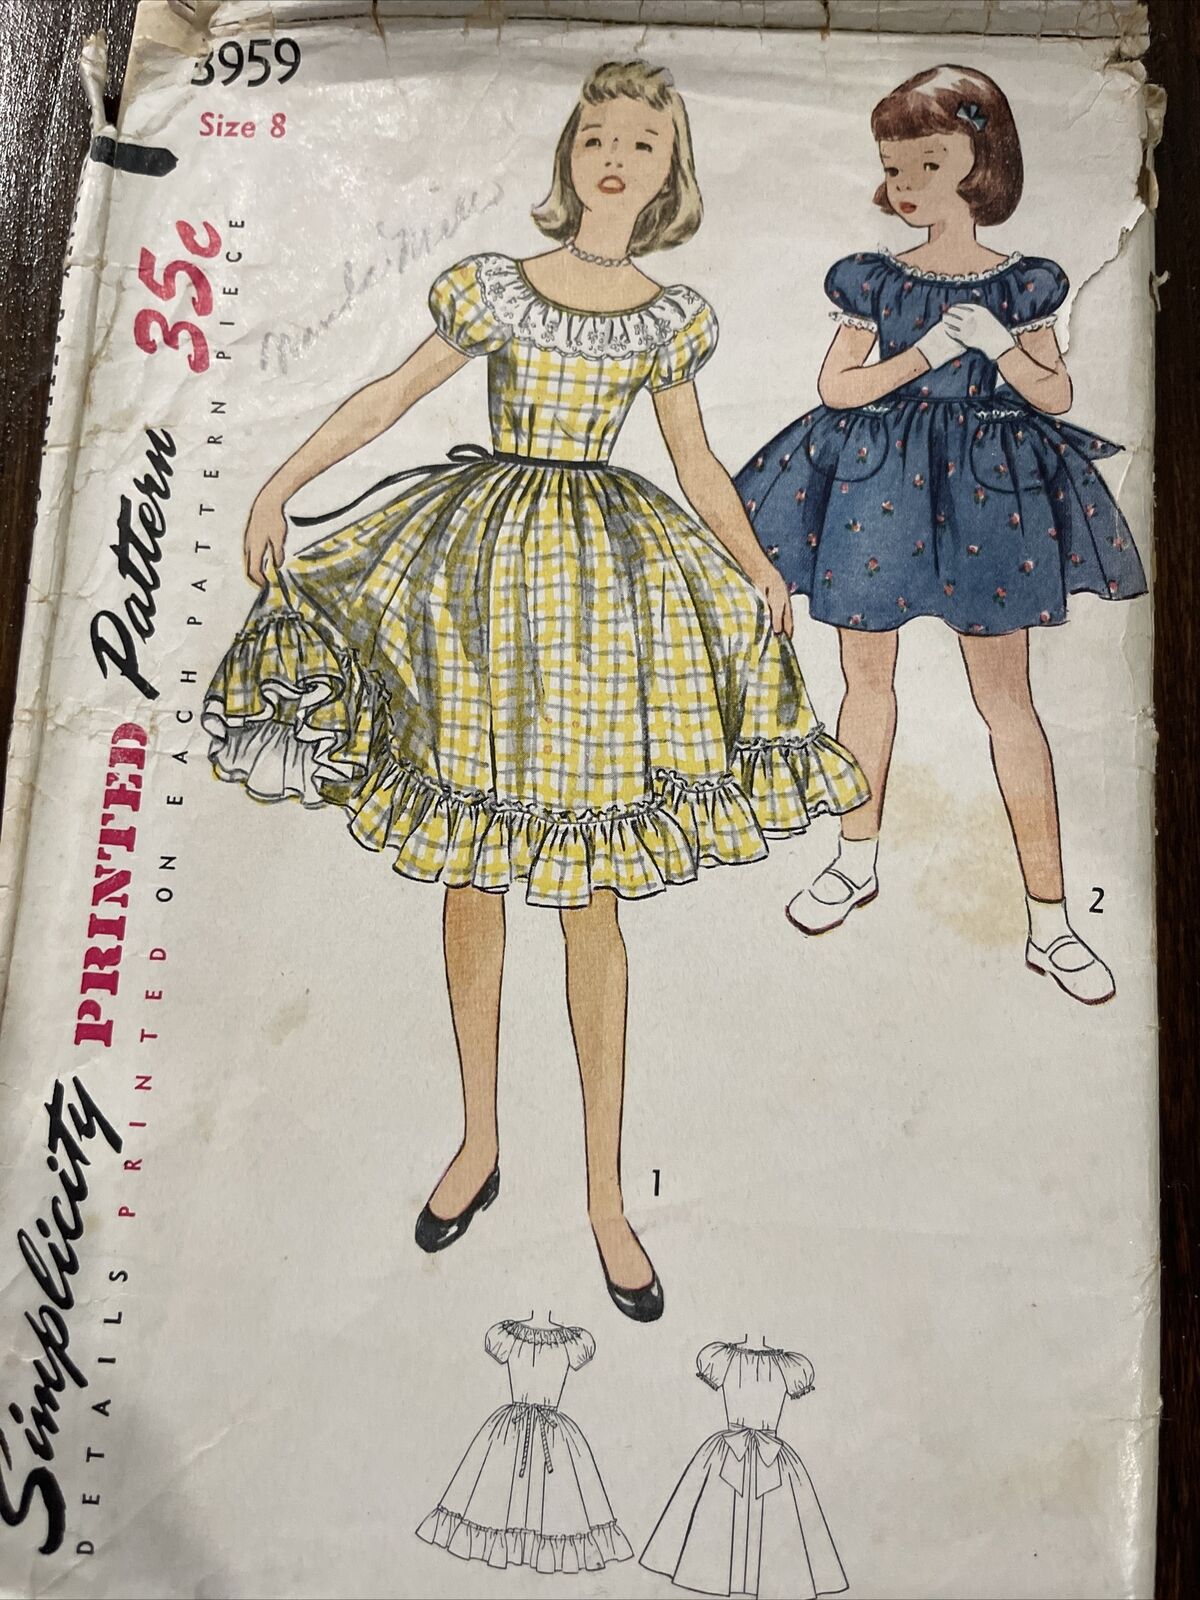 Original Vtg Simplicity Pattern 3959 Girls Sz 8 Sweet One-Piece Dress c 1952 UC